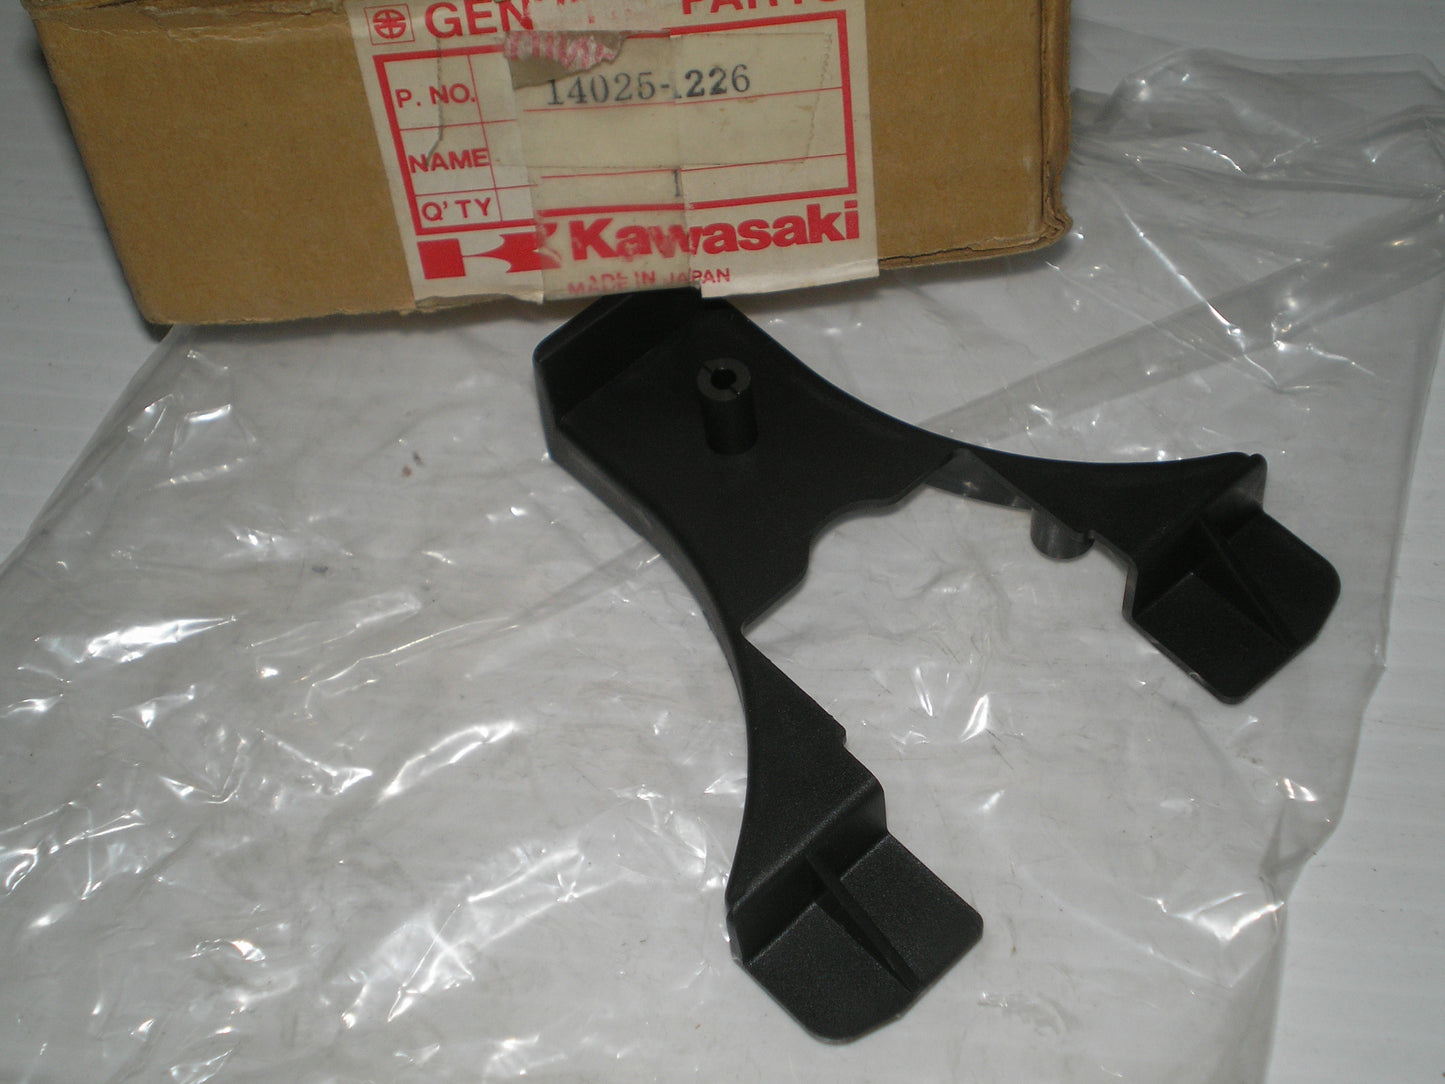 KAWASAKI KZ650 KZ750 KZ1000  Lower Pilot Box Cover  14025-1226